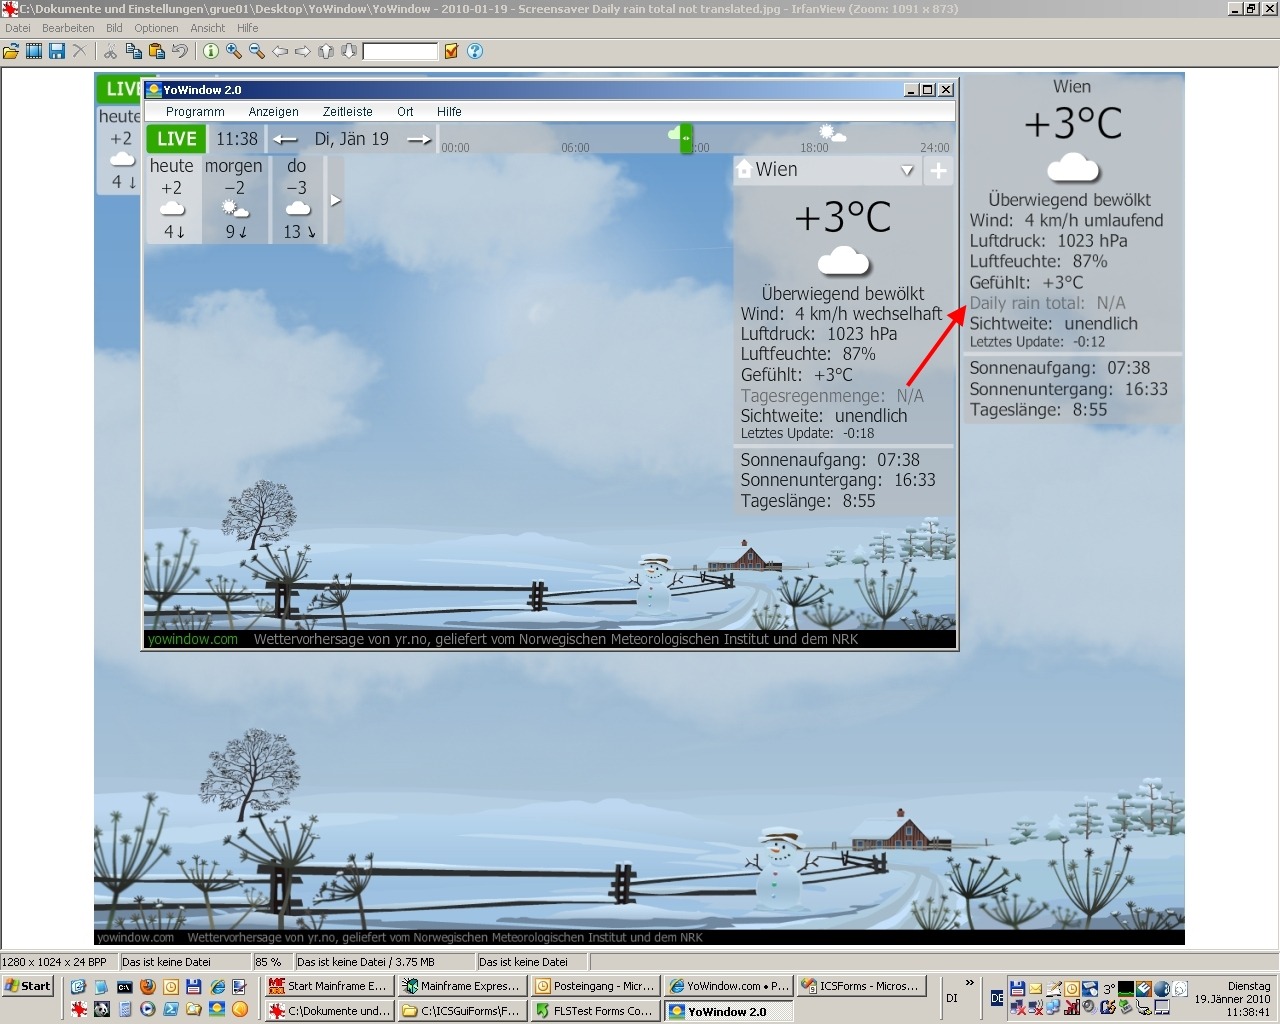 YoWindow - 2010-01-19 - Screensaver Daily rain total not translated.jpg